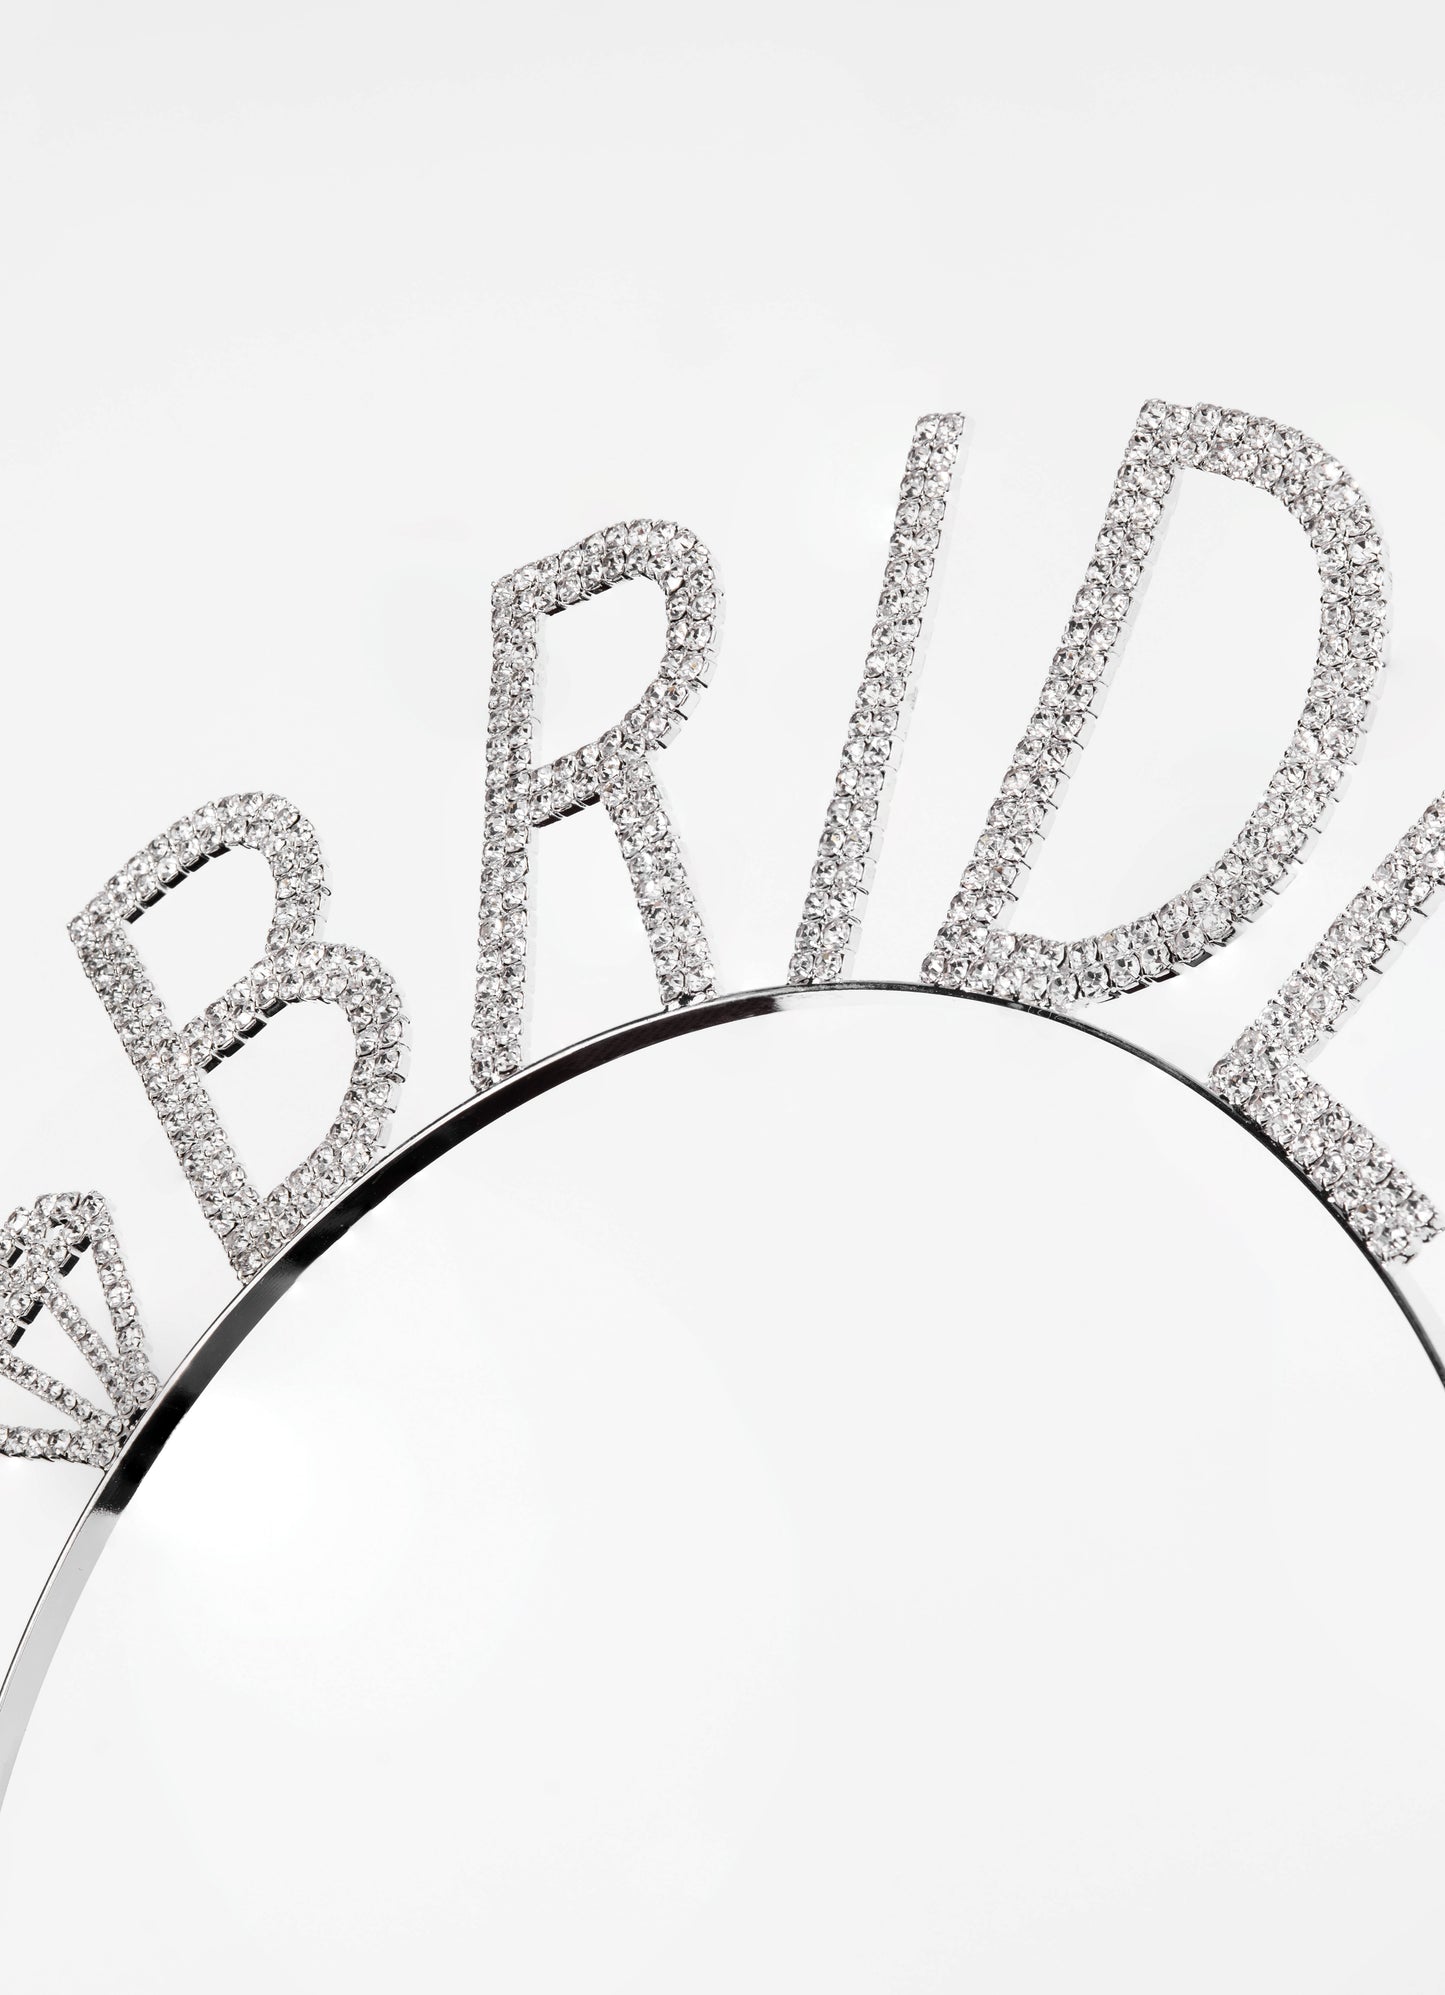 BRIDE and Diamonds Headband